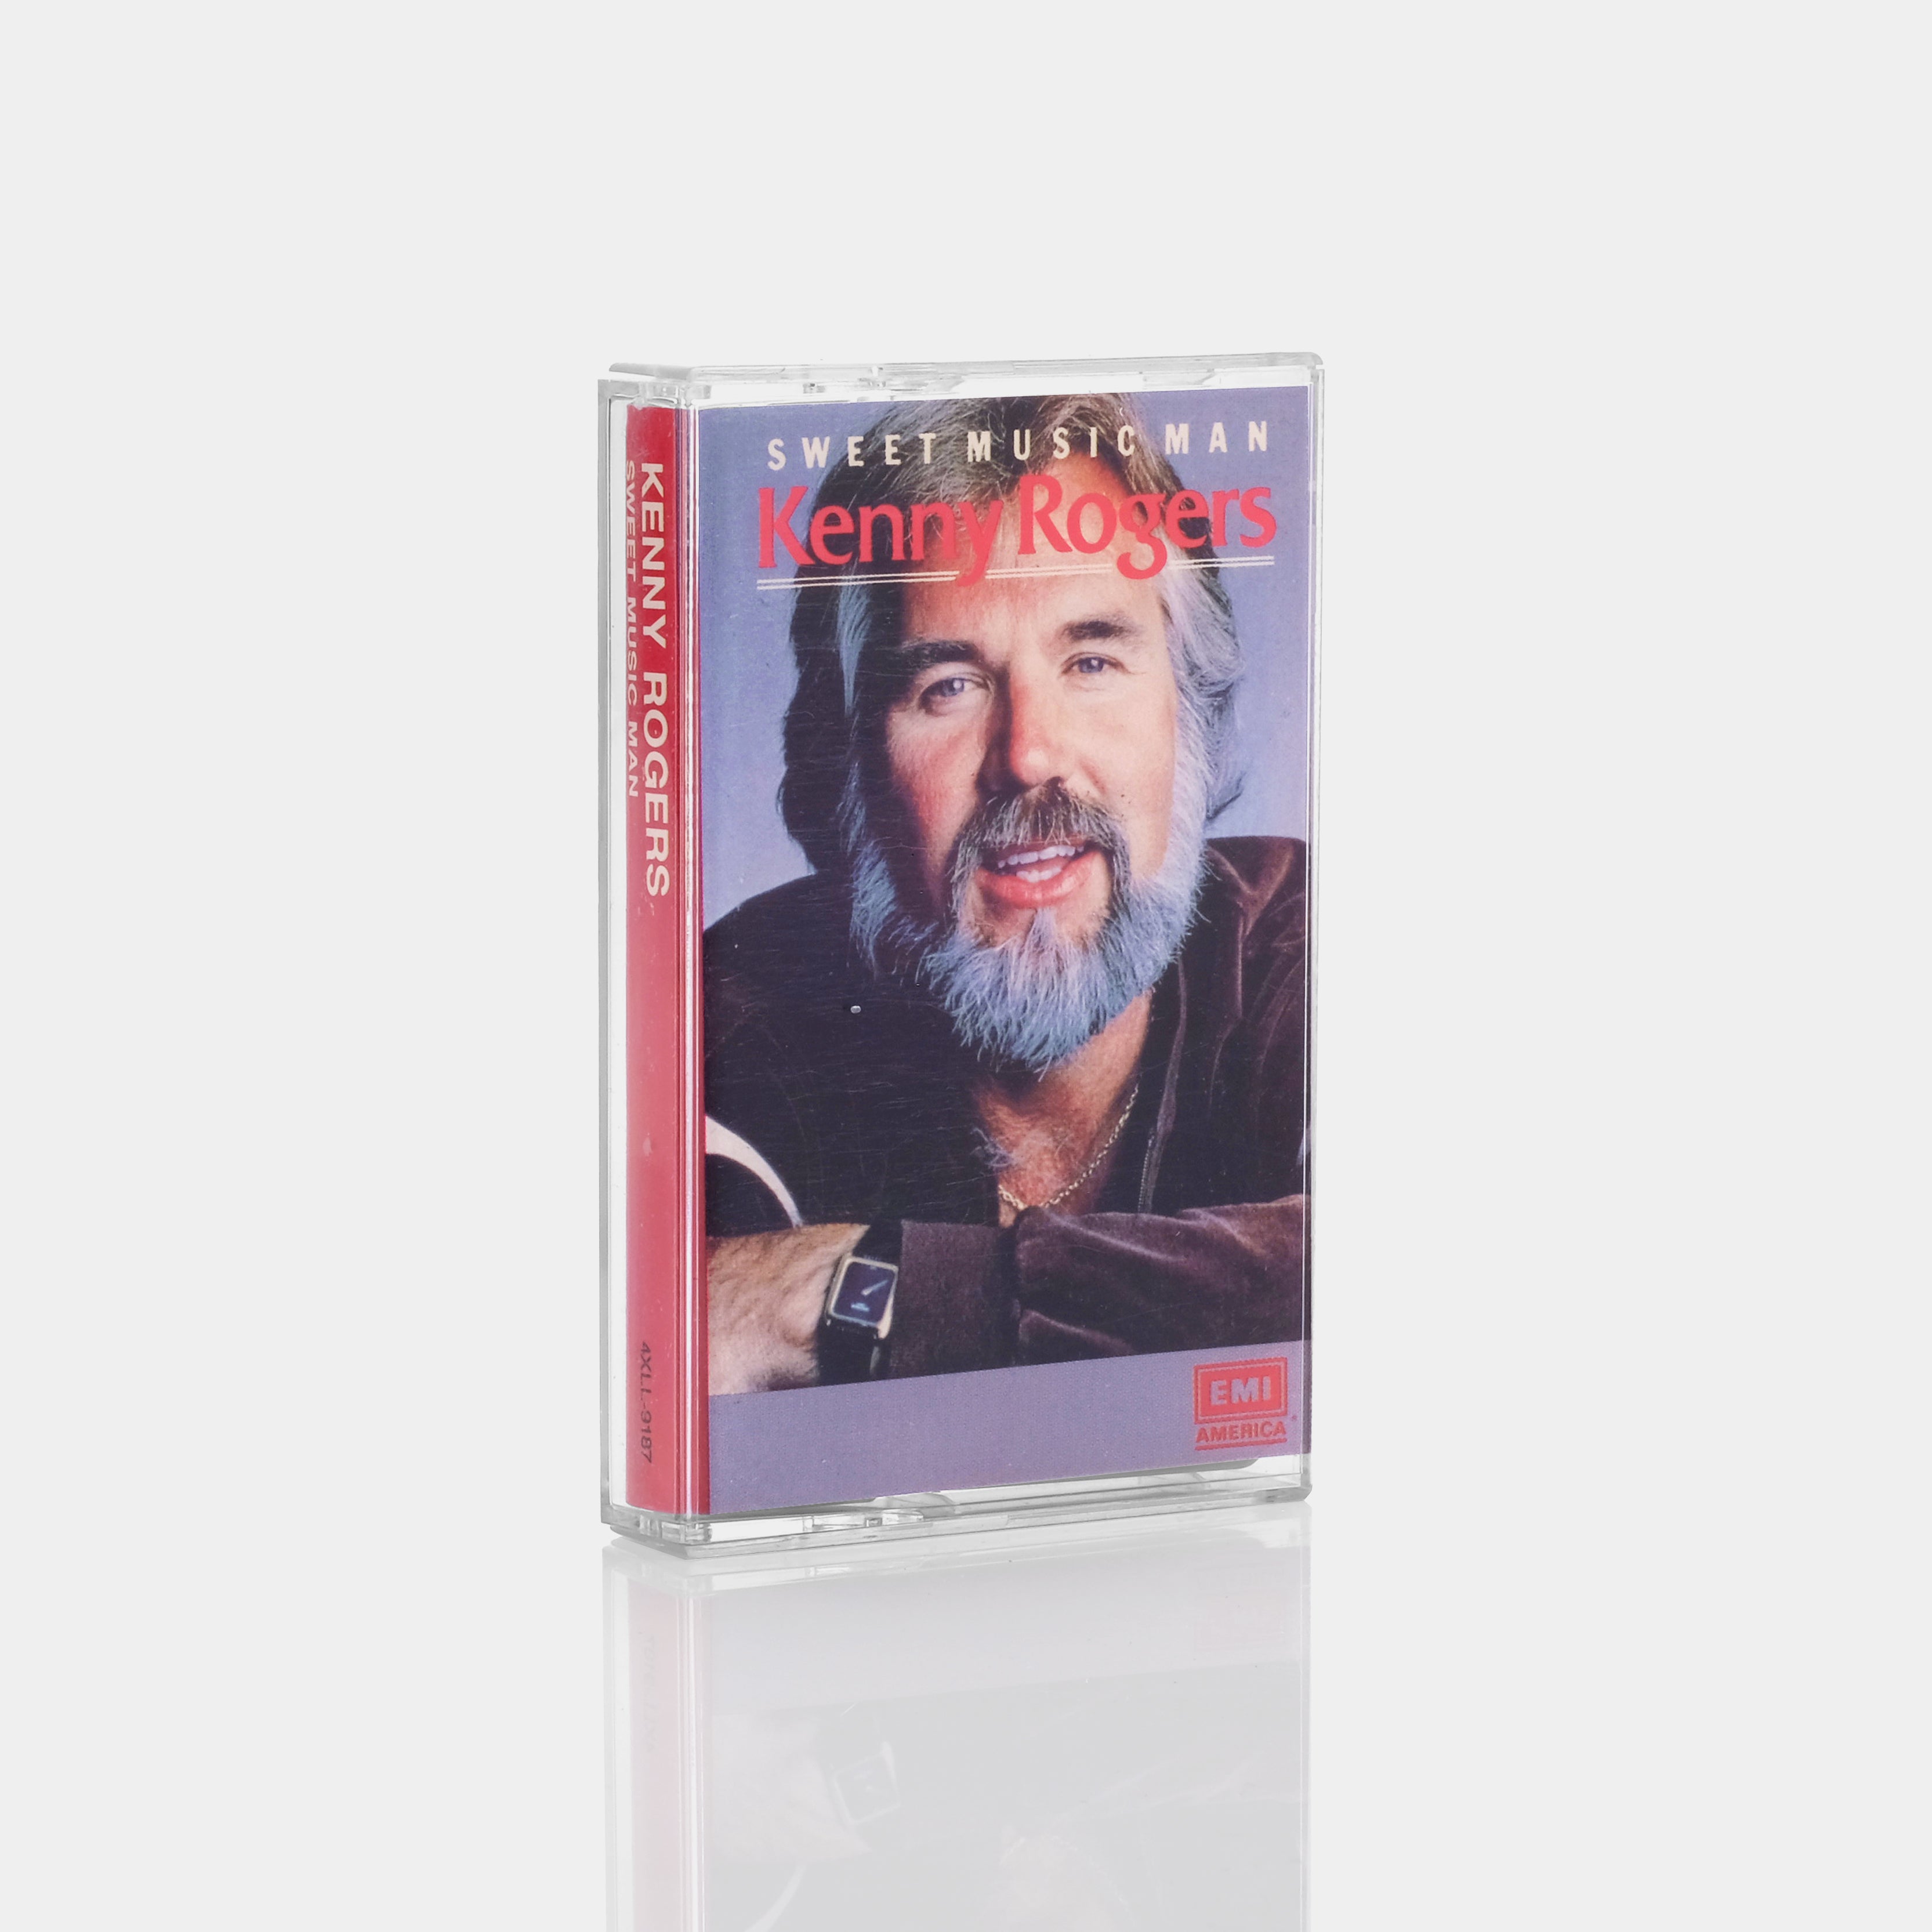 Kenny Rogers - Sweet Music Man Cassette Tape